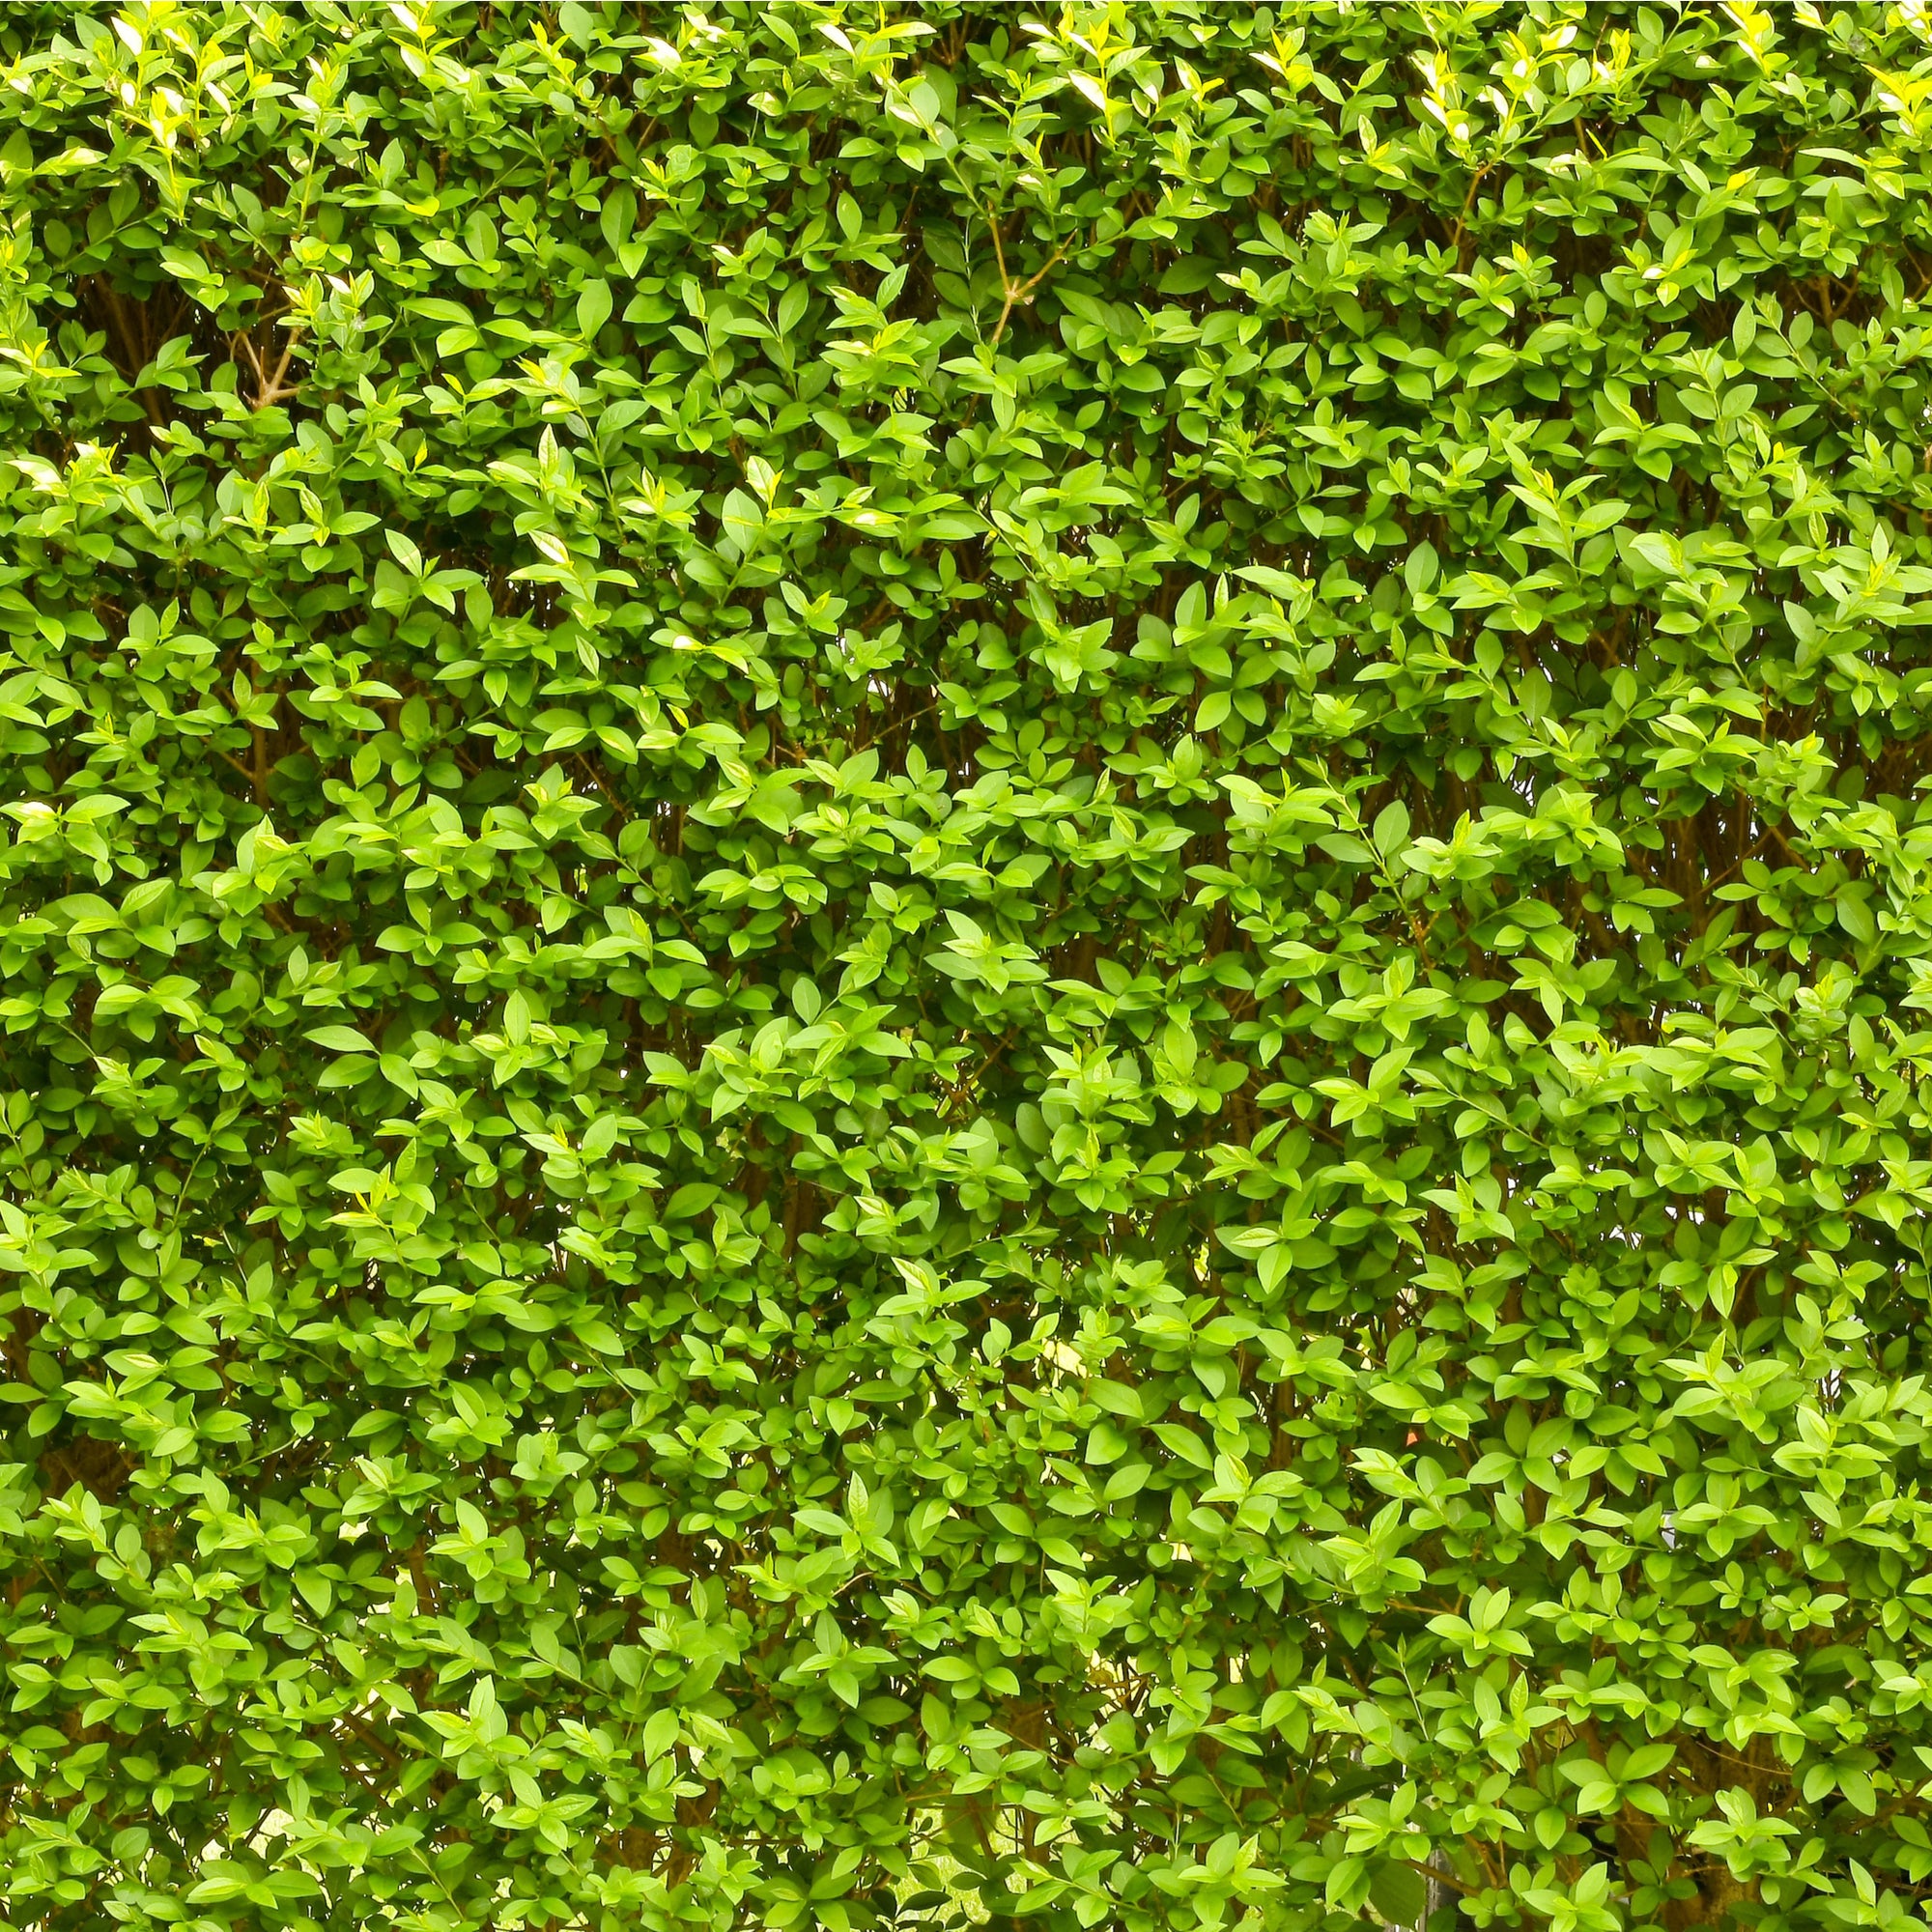 Ligustrum ovalifolium - Privet Hedging (10 Plants)